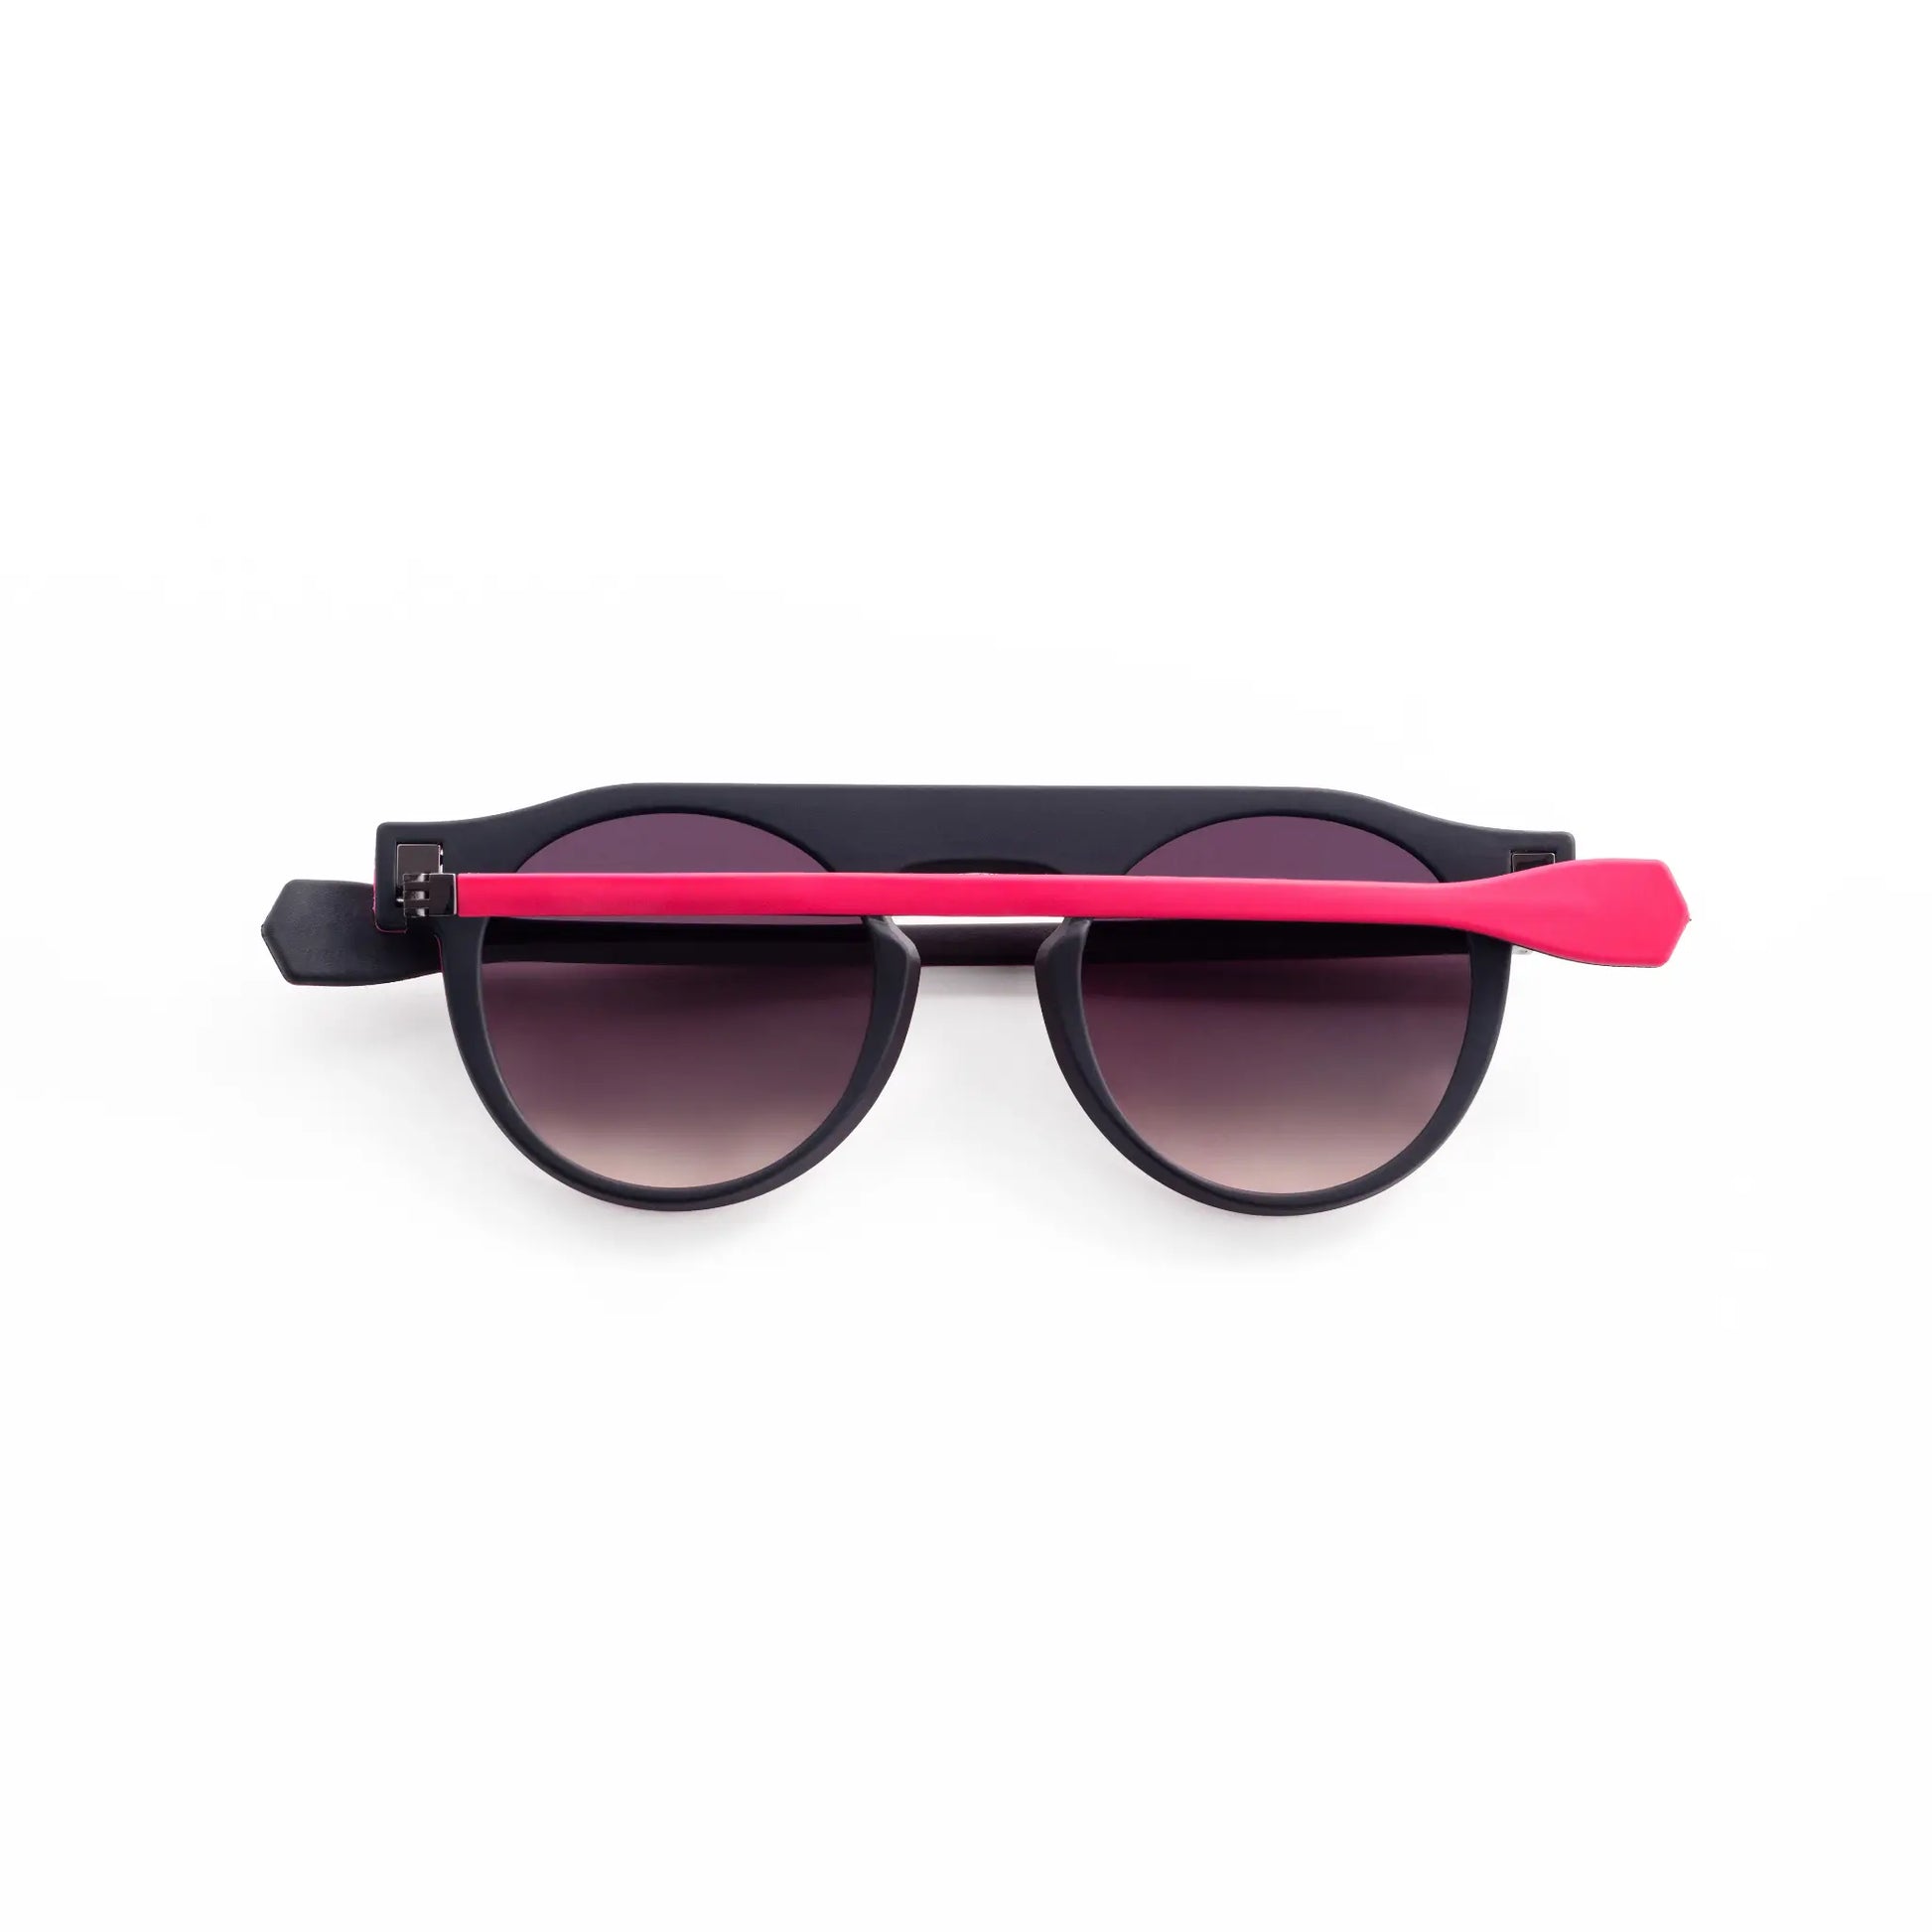 Reverso sunglasses black & pink reversible & ultra light back view